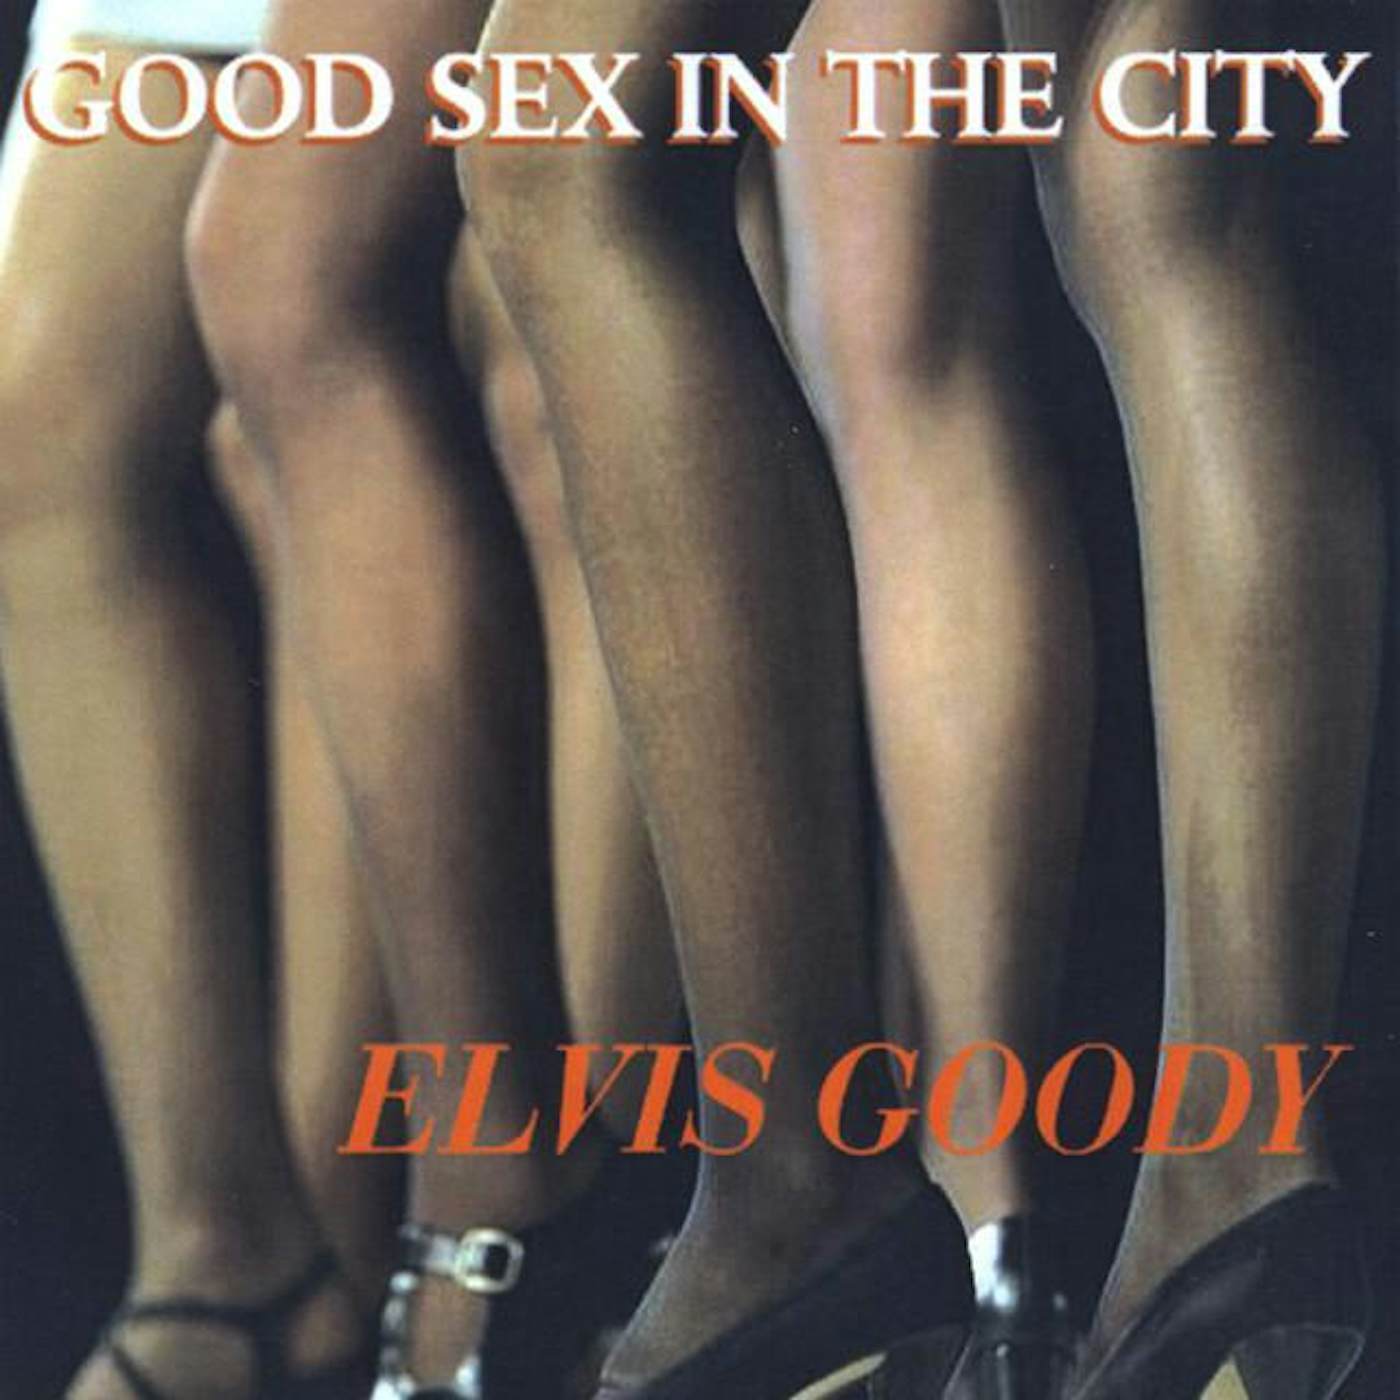 Elvis Goody